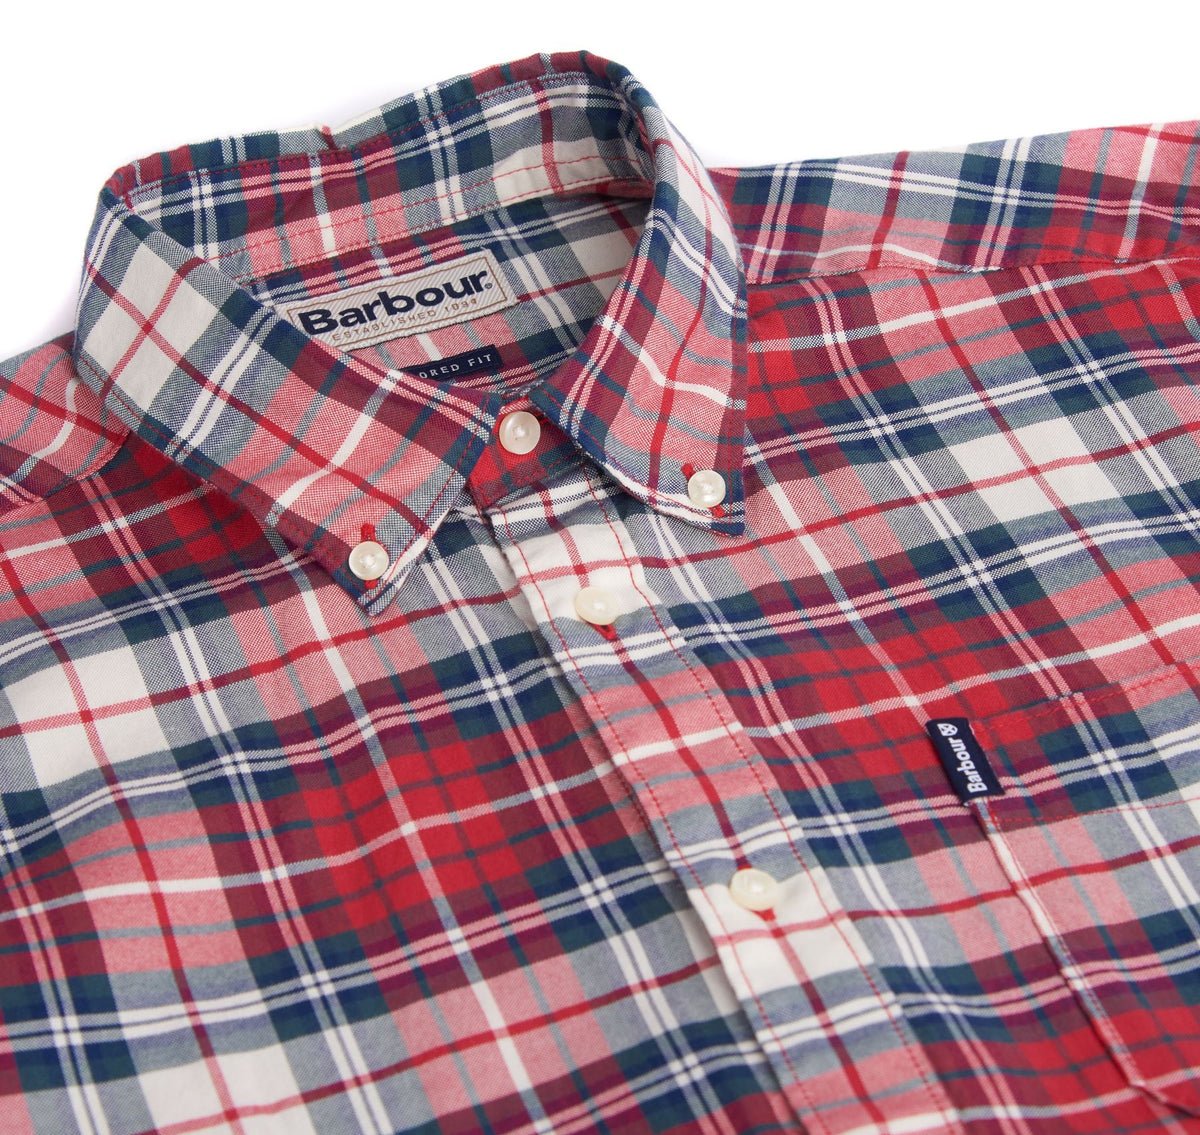 Barbour Men's 'Highland Check 10' Shirt - Long Sleeved, 03, Msh4548, Red